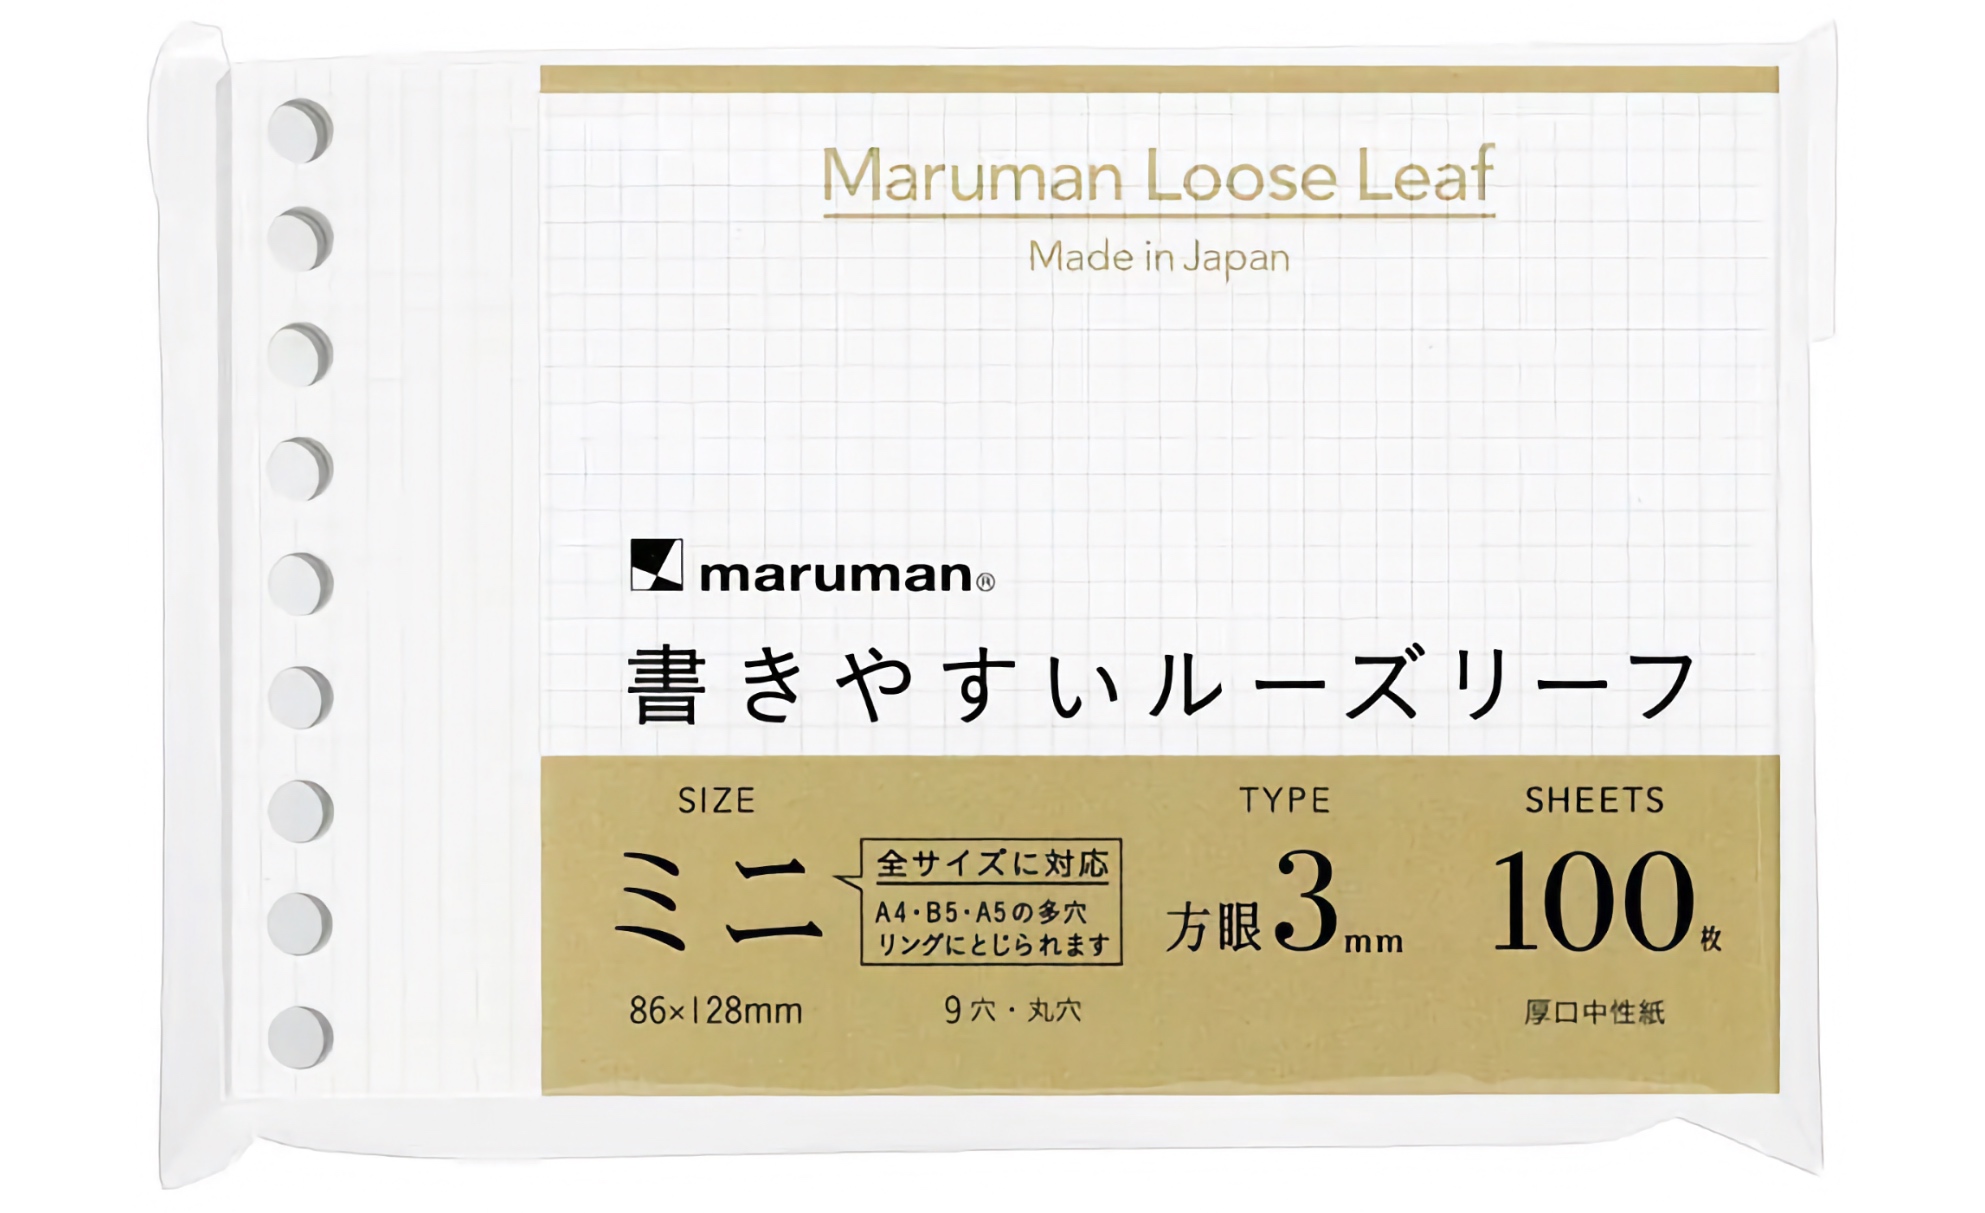 Maruman Loose Leaf Easy to Write Gridded 3 mm